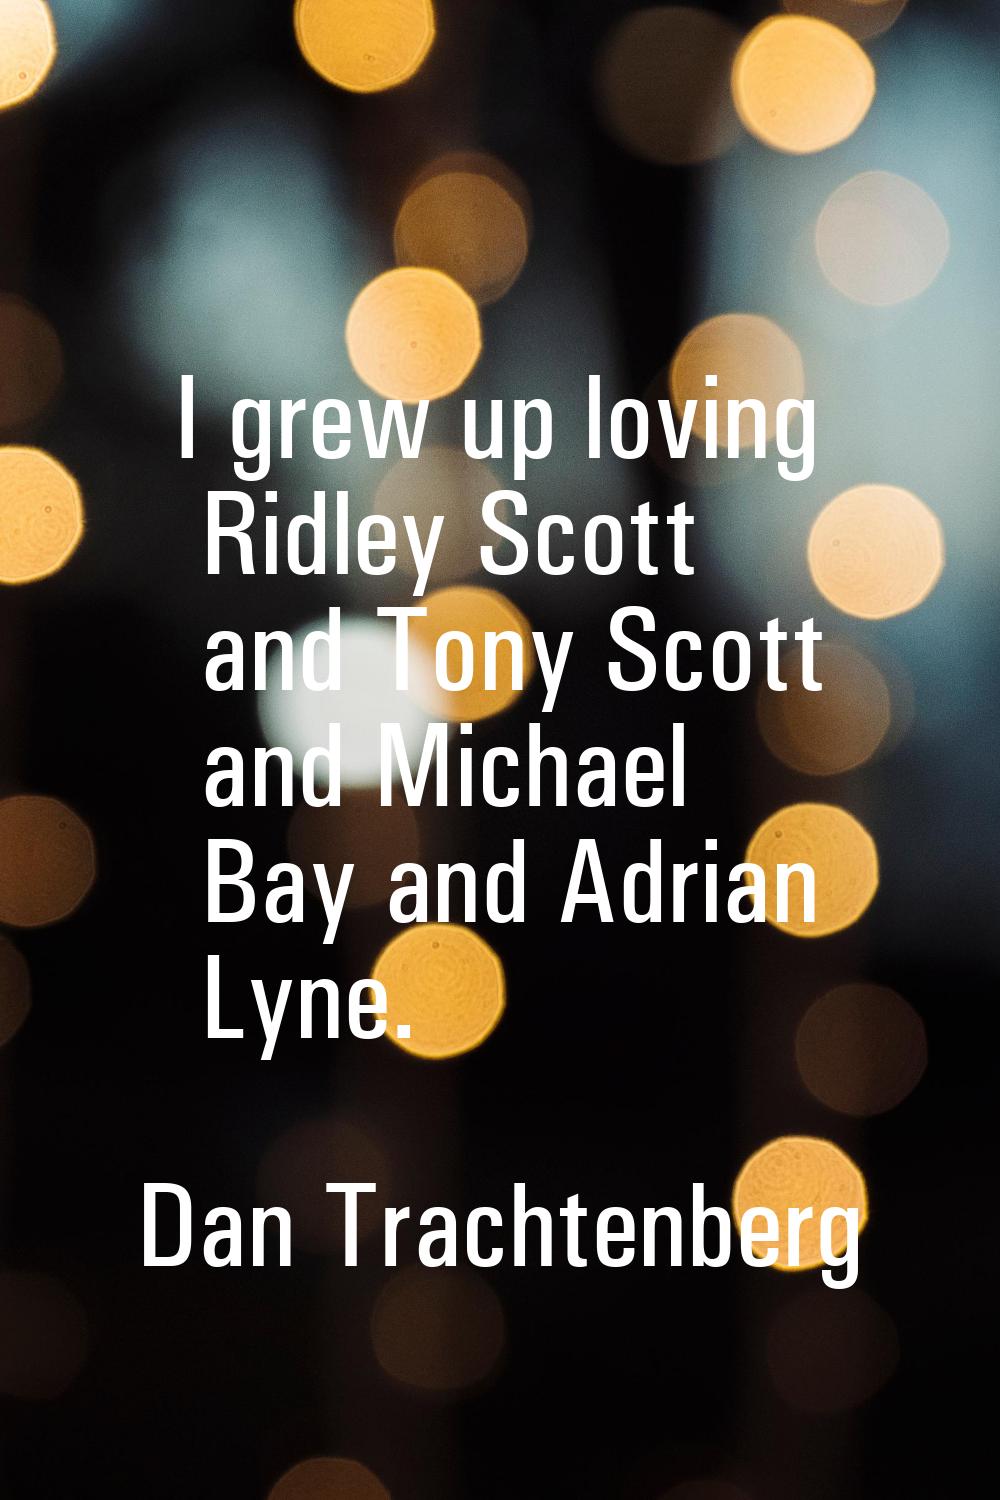 I grew up loving Ridley Scott and Tony Scott and Michael Bay and Adrian Lyne.